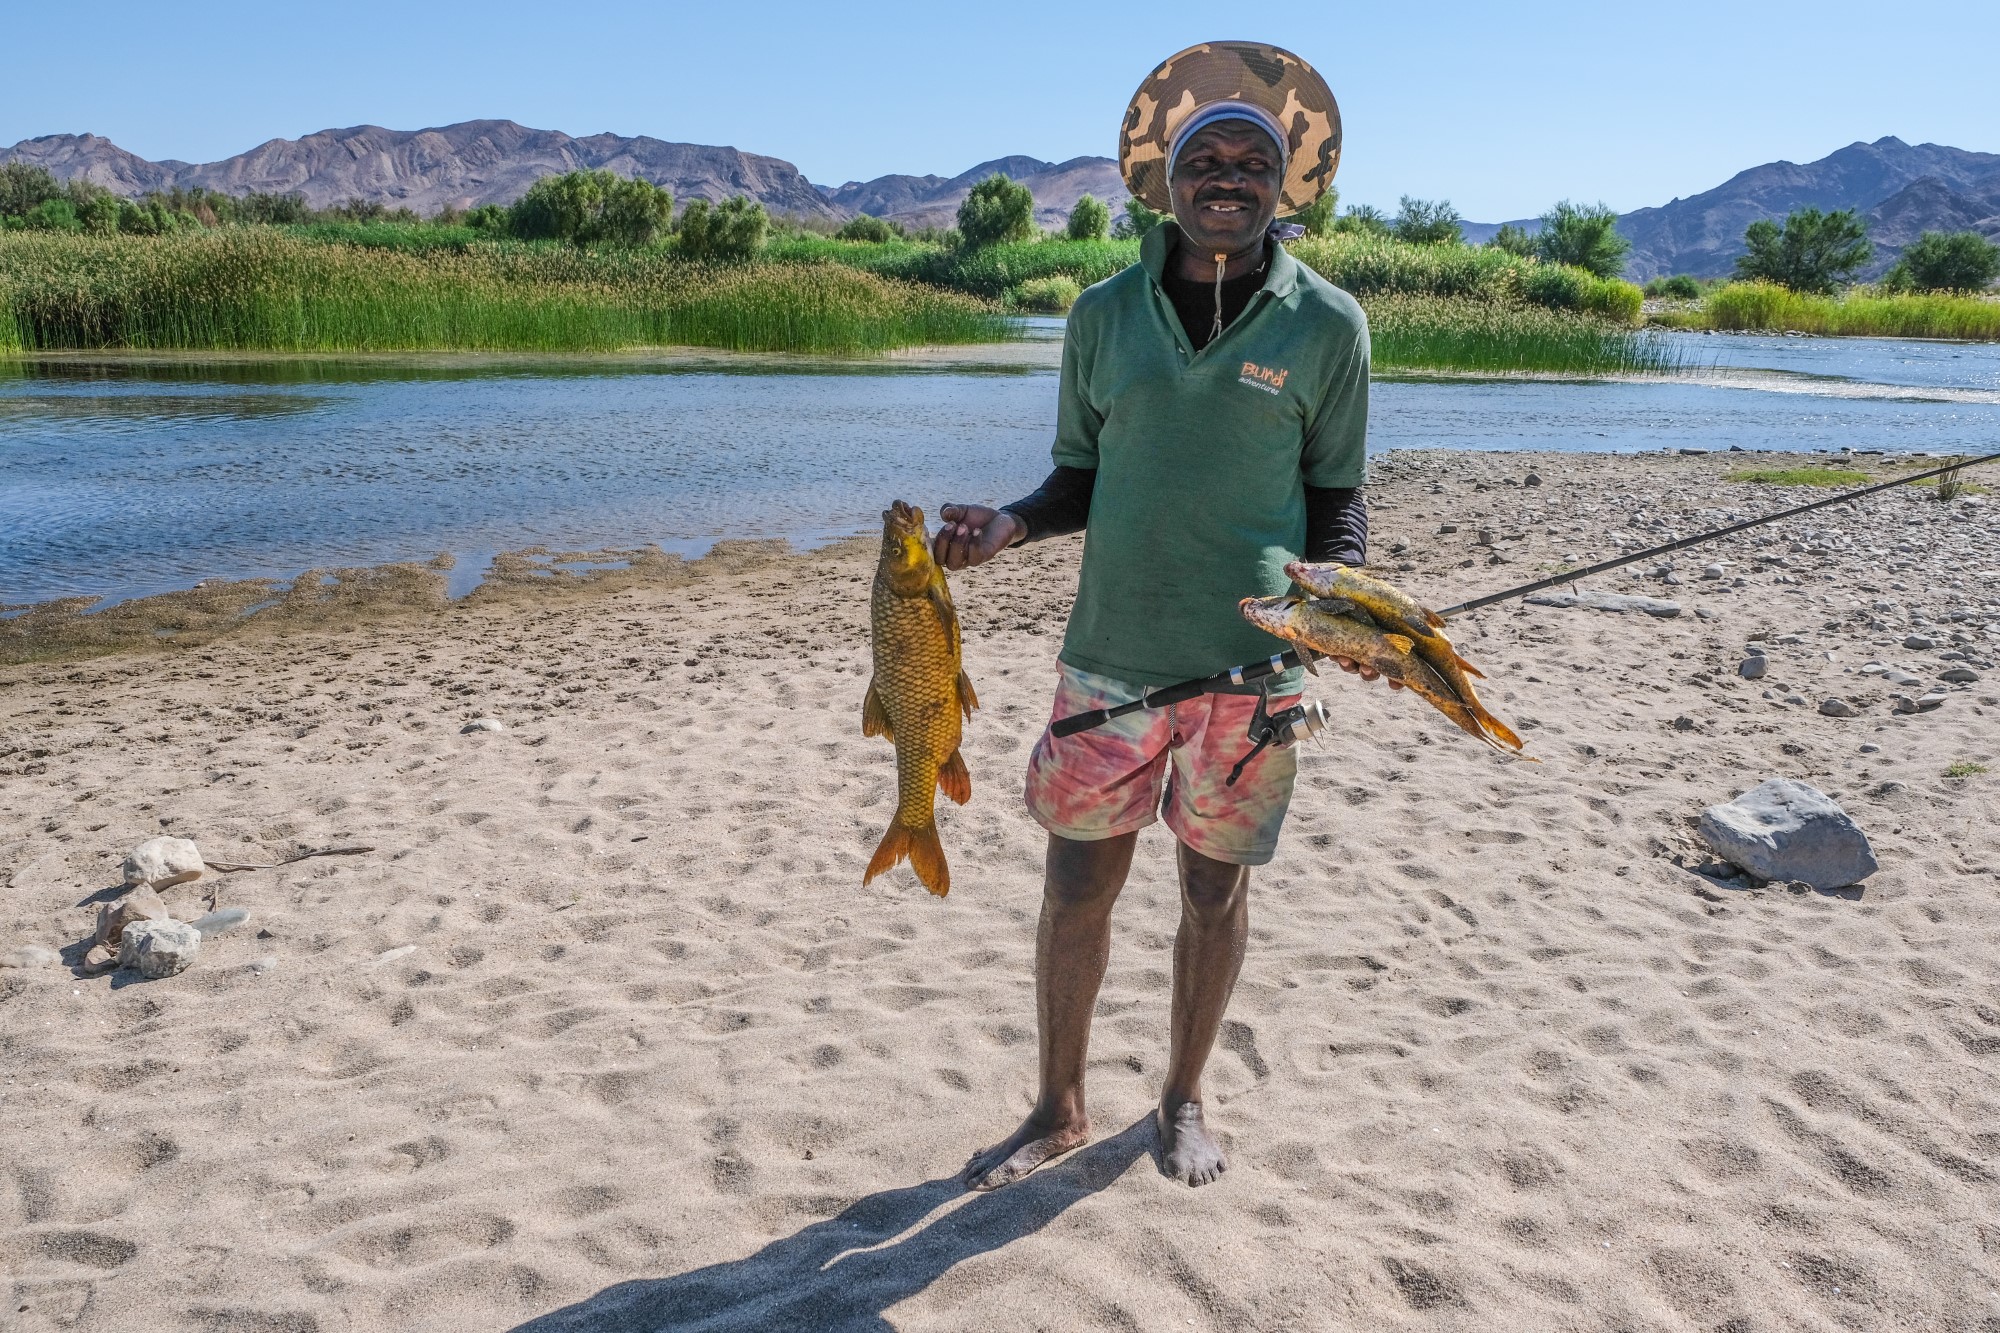 Erustas knows how to catch fish on the Orange River. ©Gero Lilleike